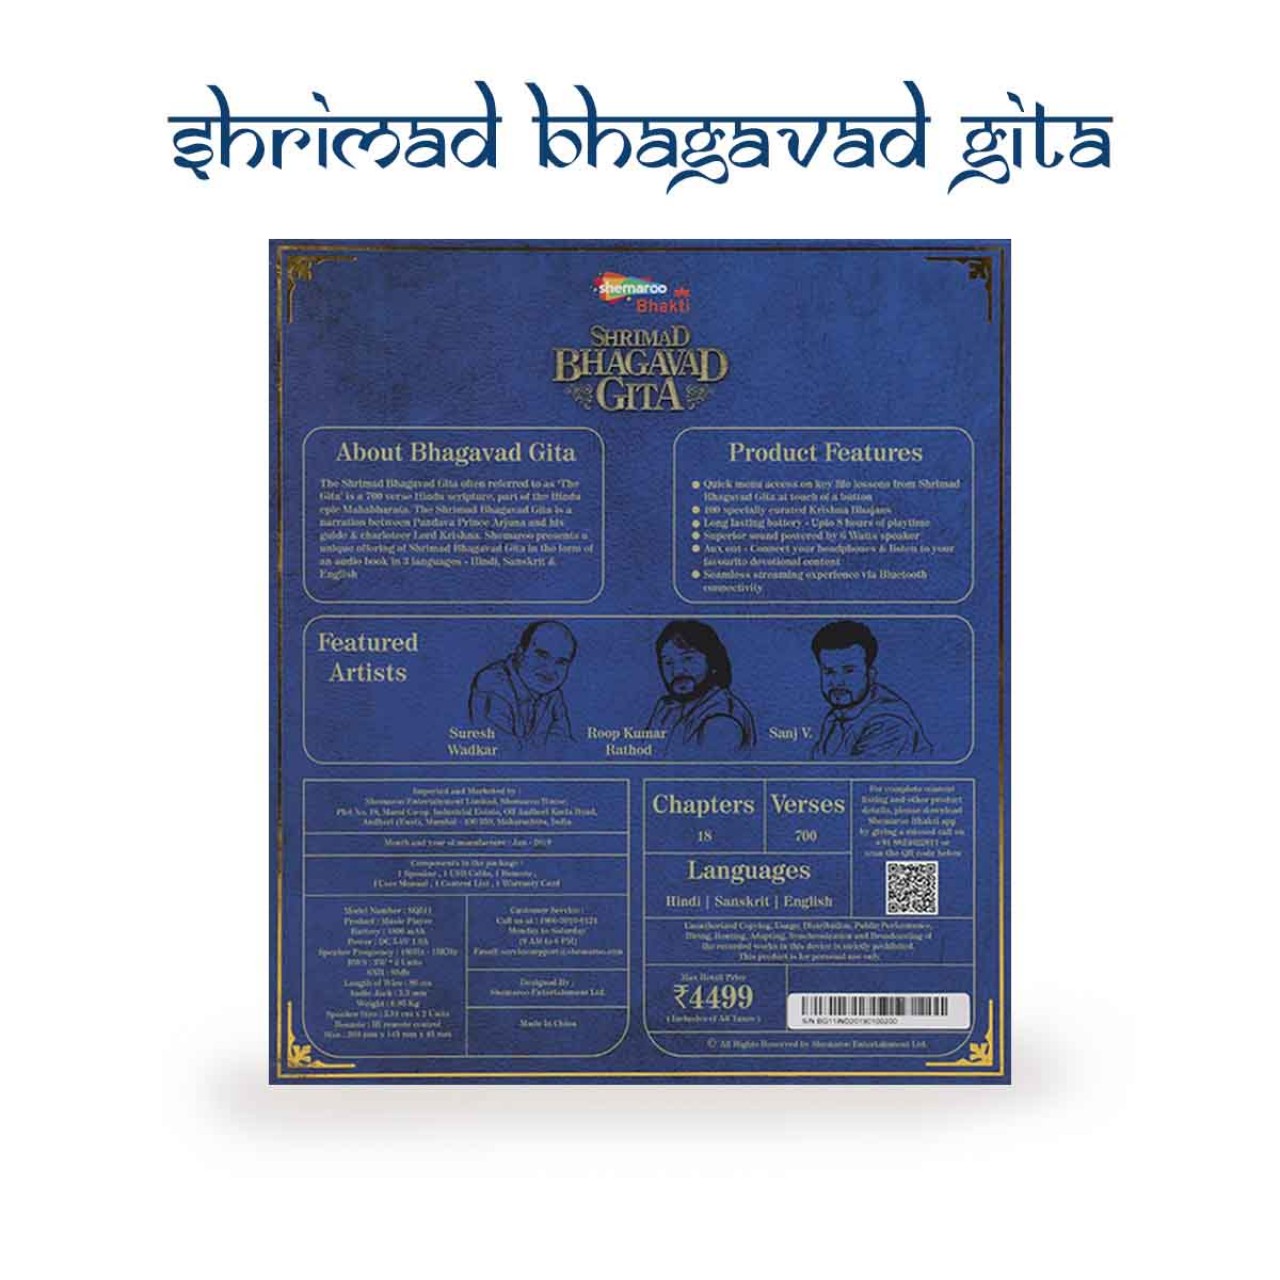 Shrimad Bhagavad Gita Audio Book